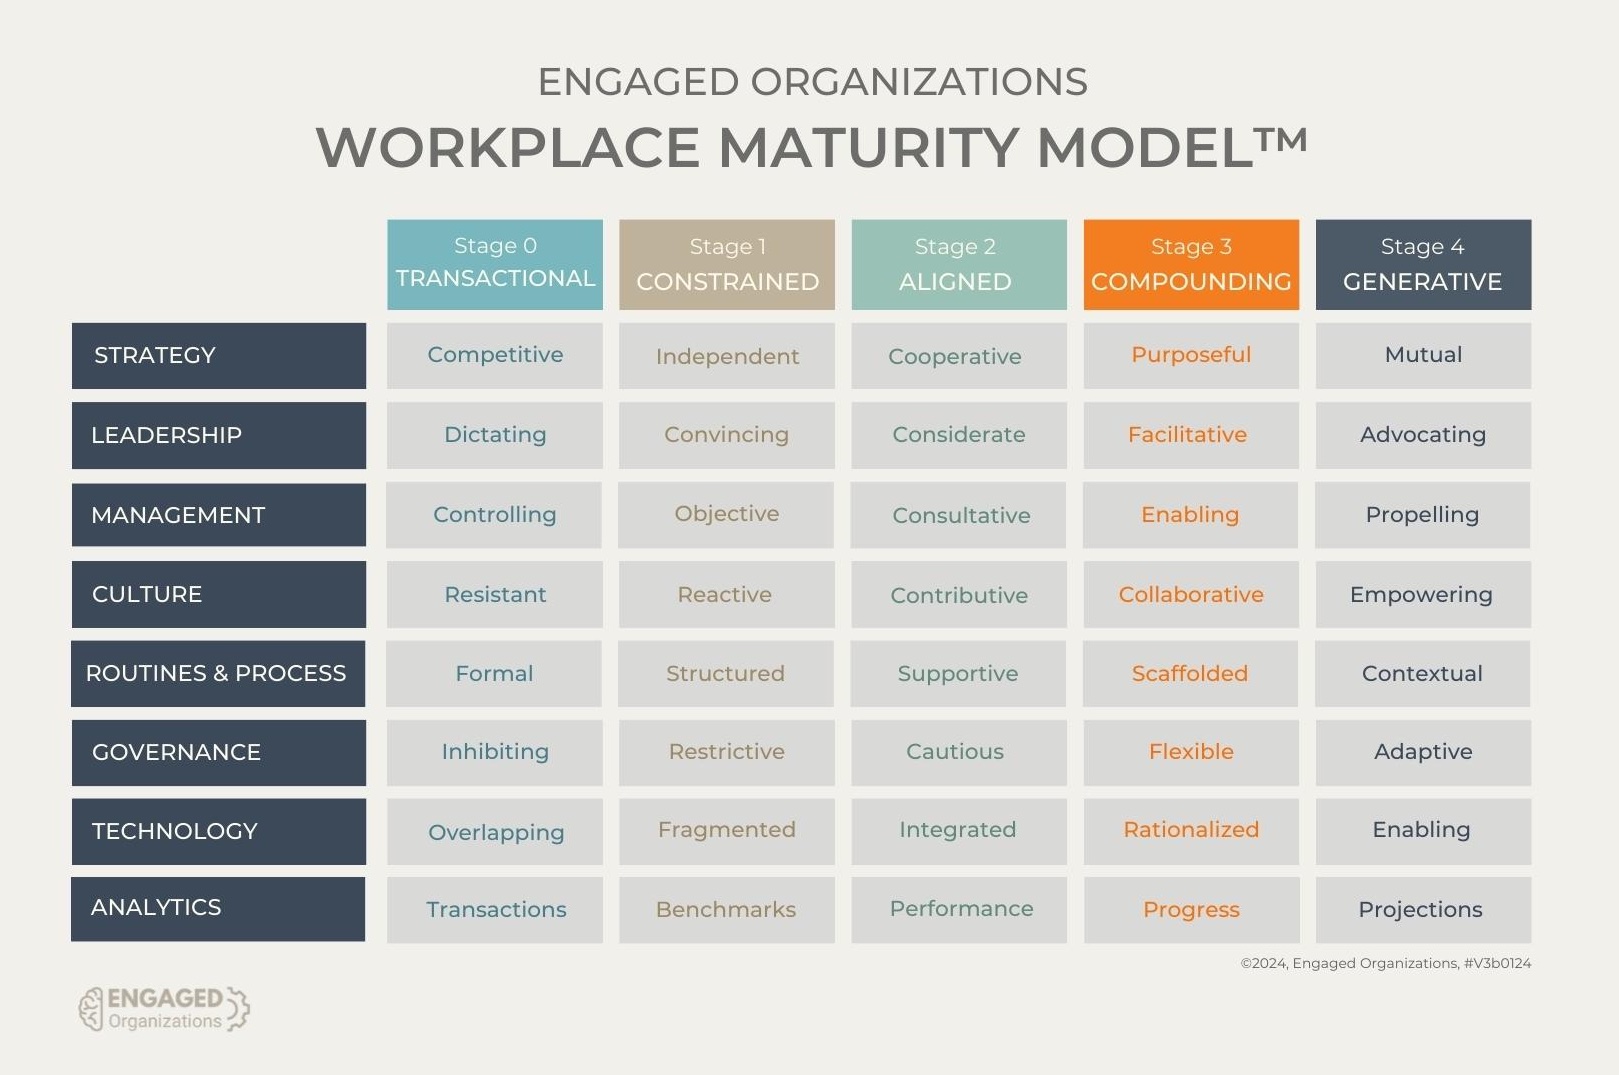 Engaged Organizations Workplace Maturity Model V3b0124